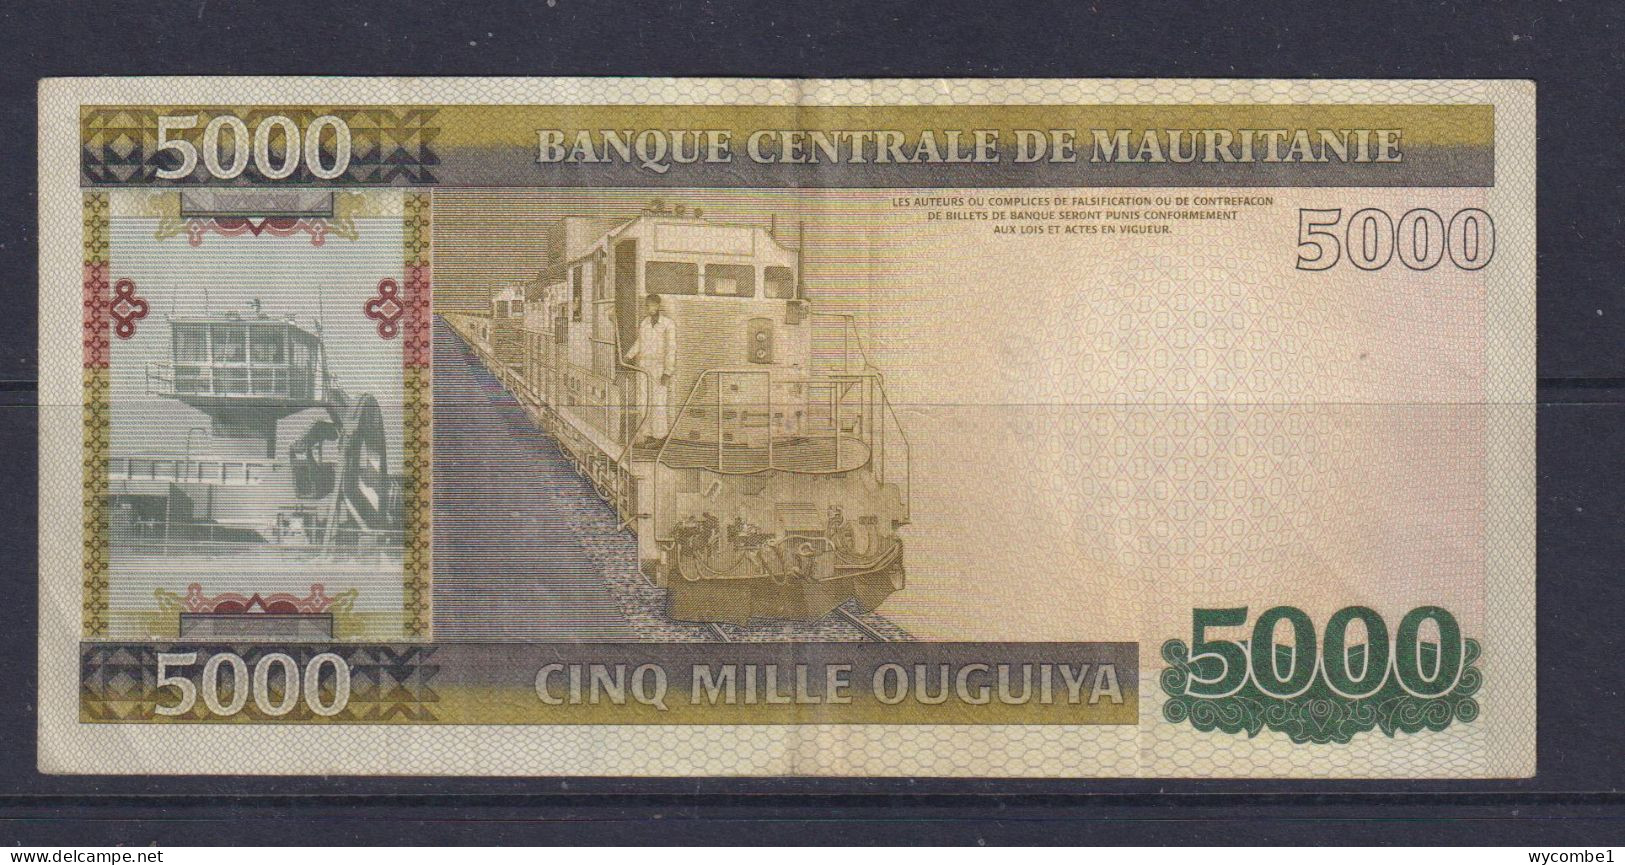 MAURITANIA - 2011 5000 Ouguiya Circulated Banknote - Mauritanie